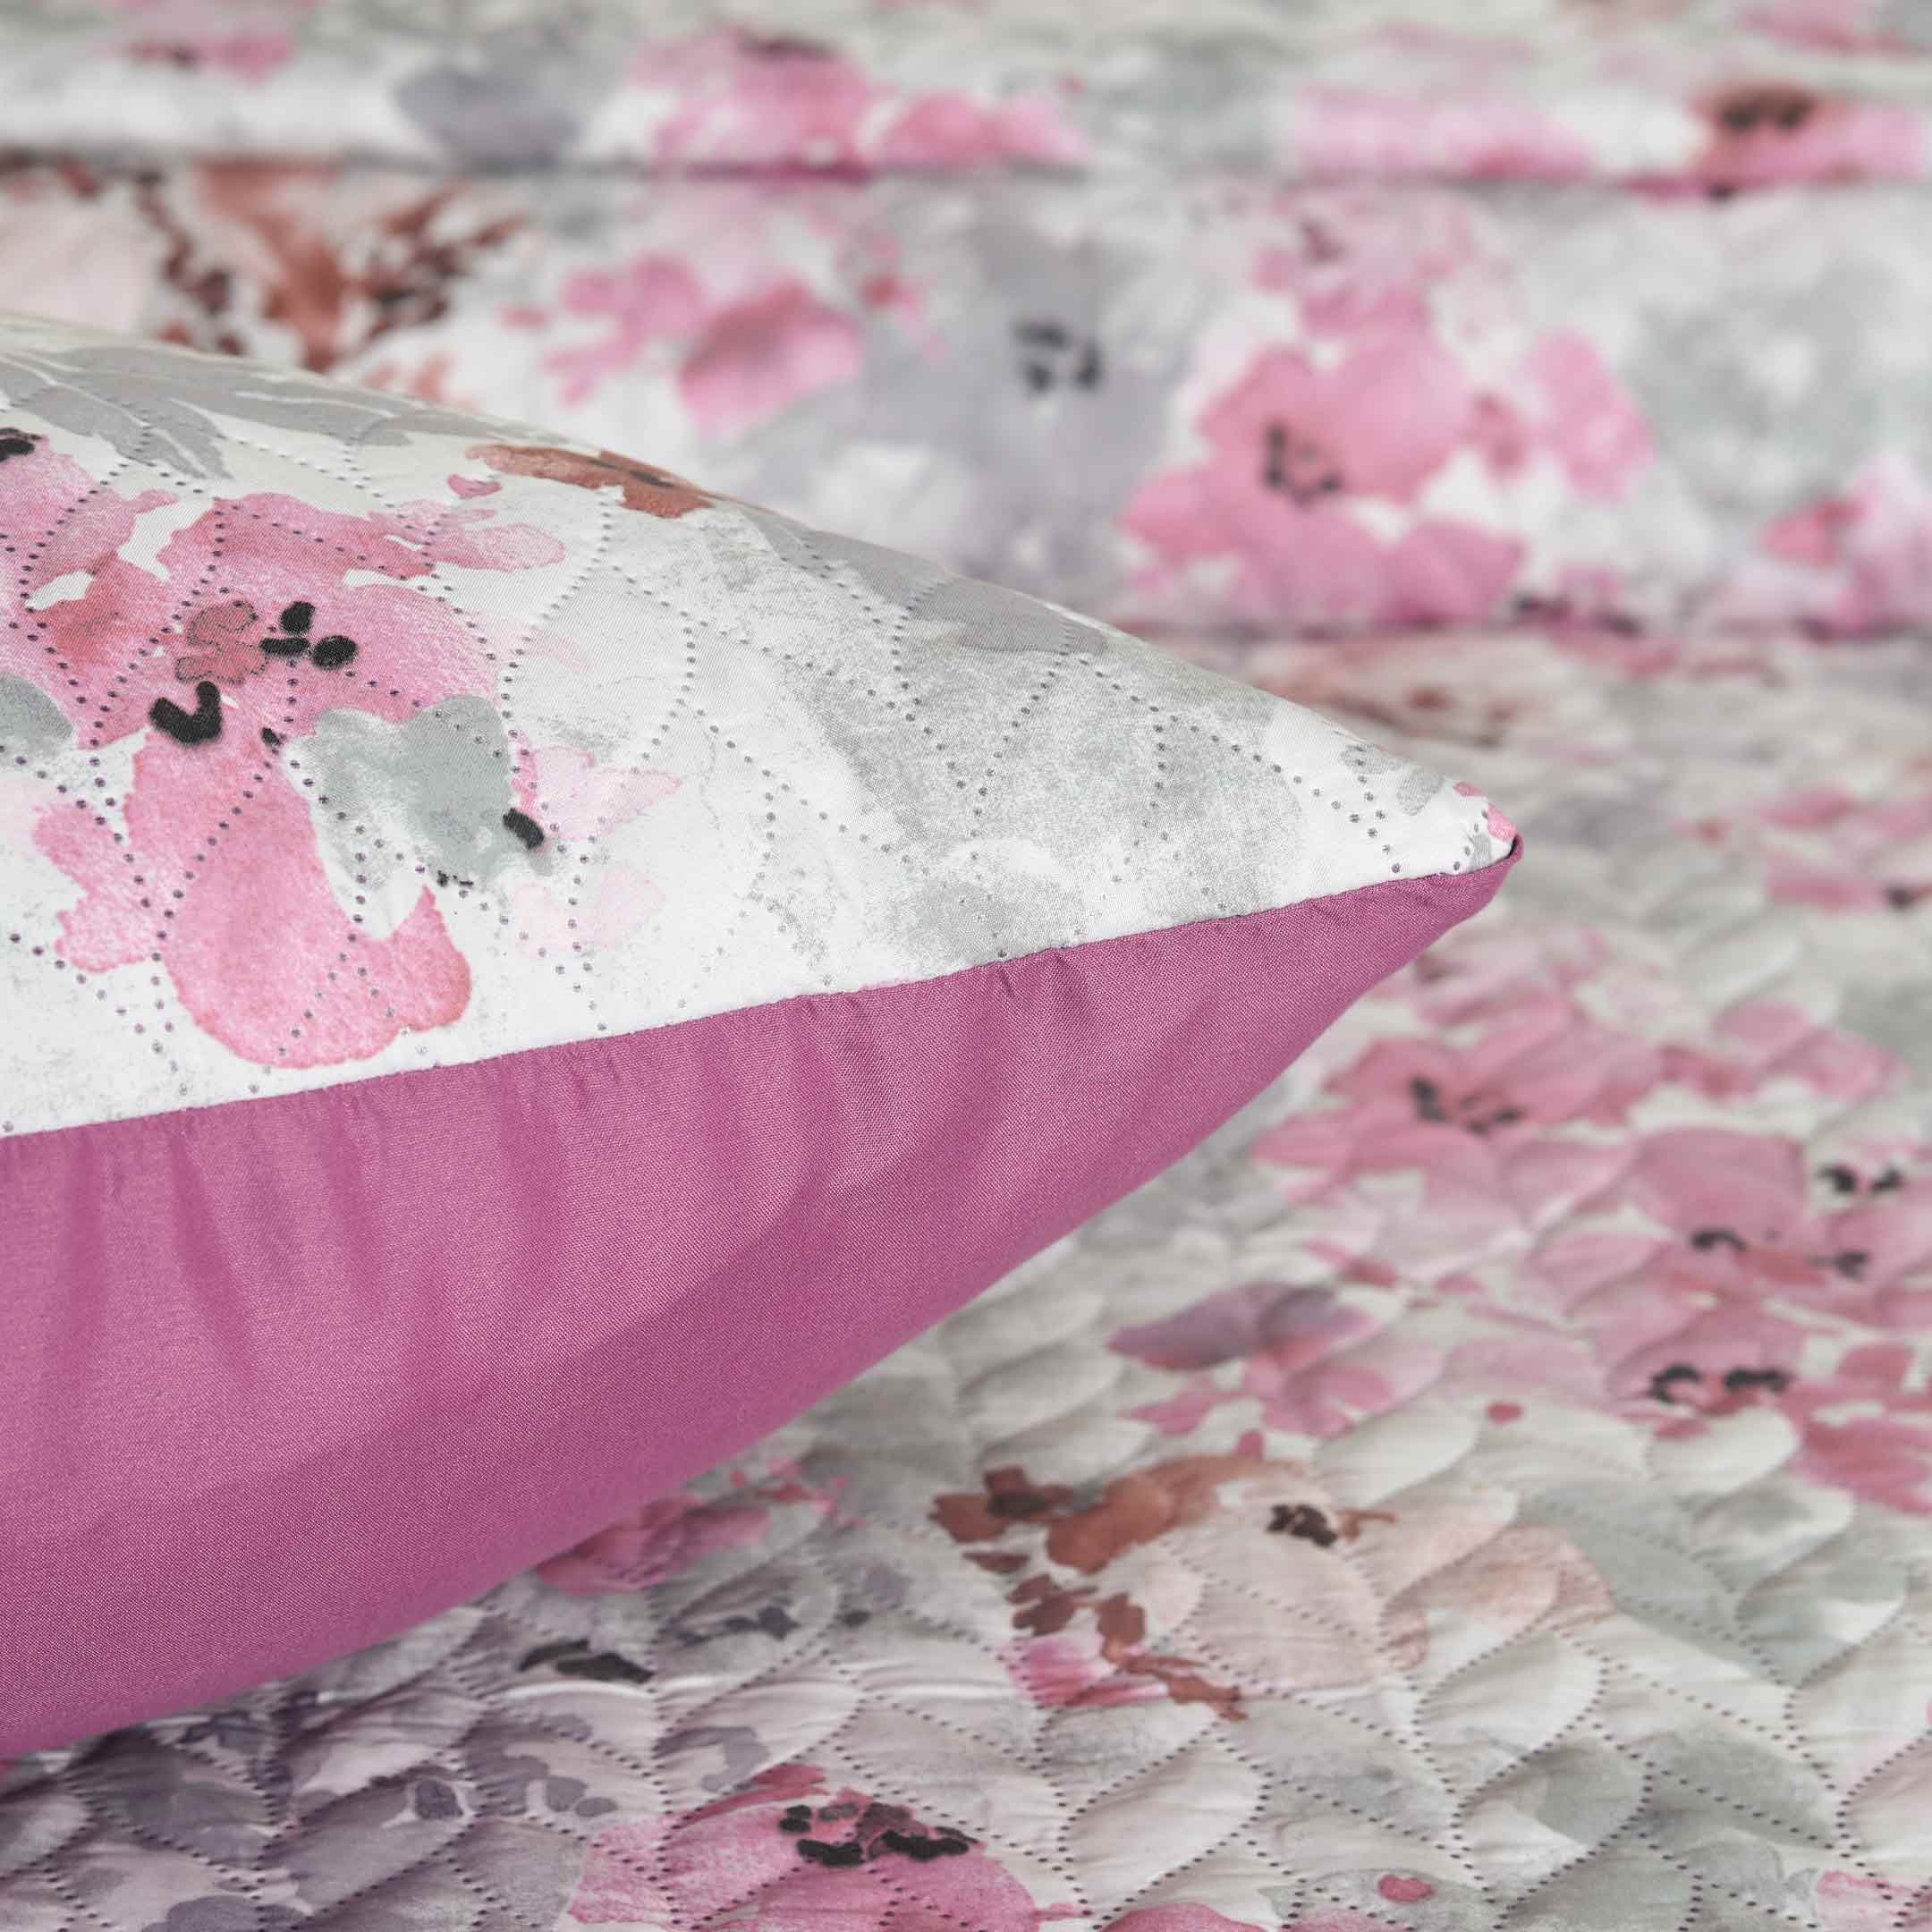 Lilac Peonies Bedspread 6 pcs Set